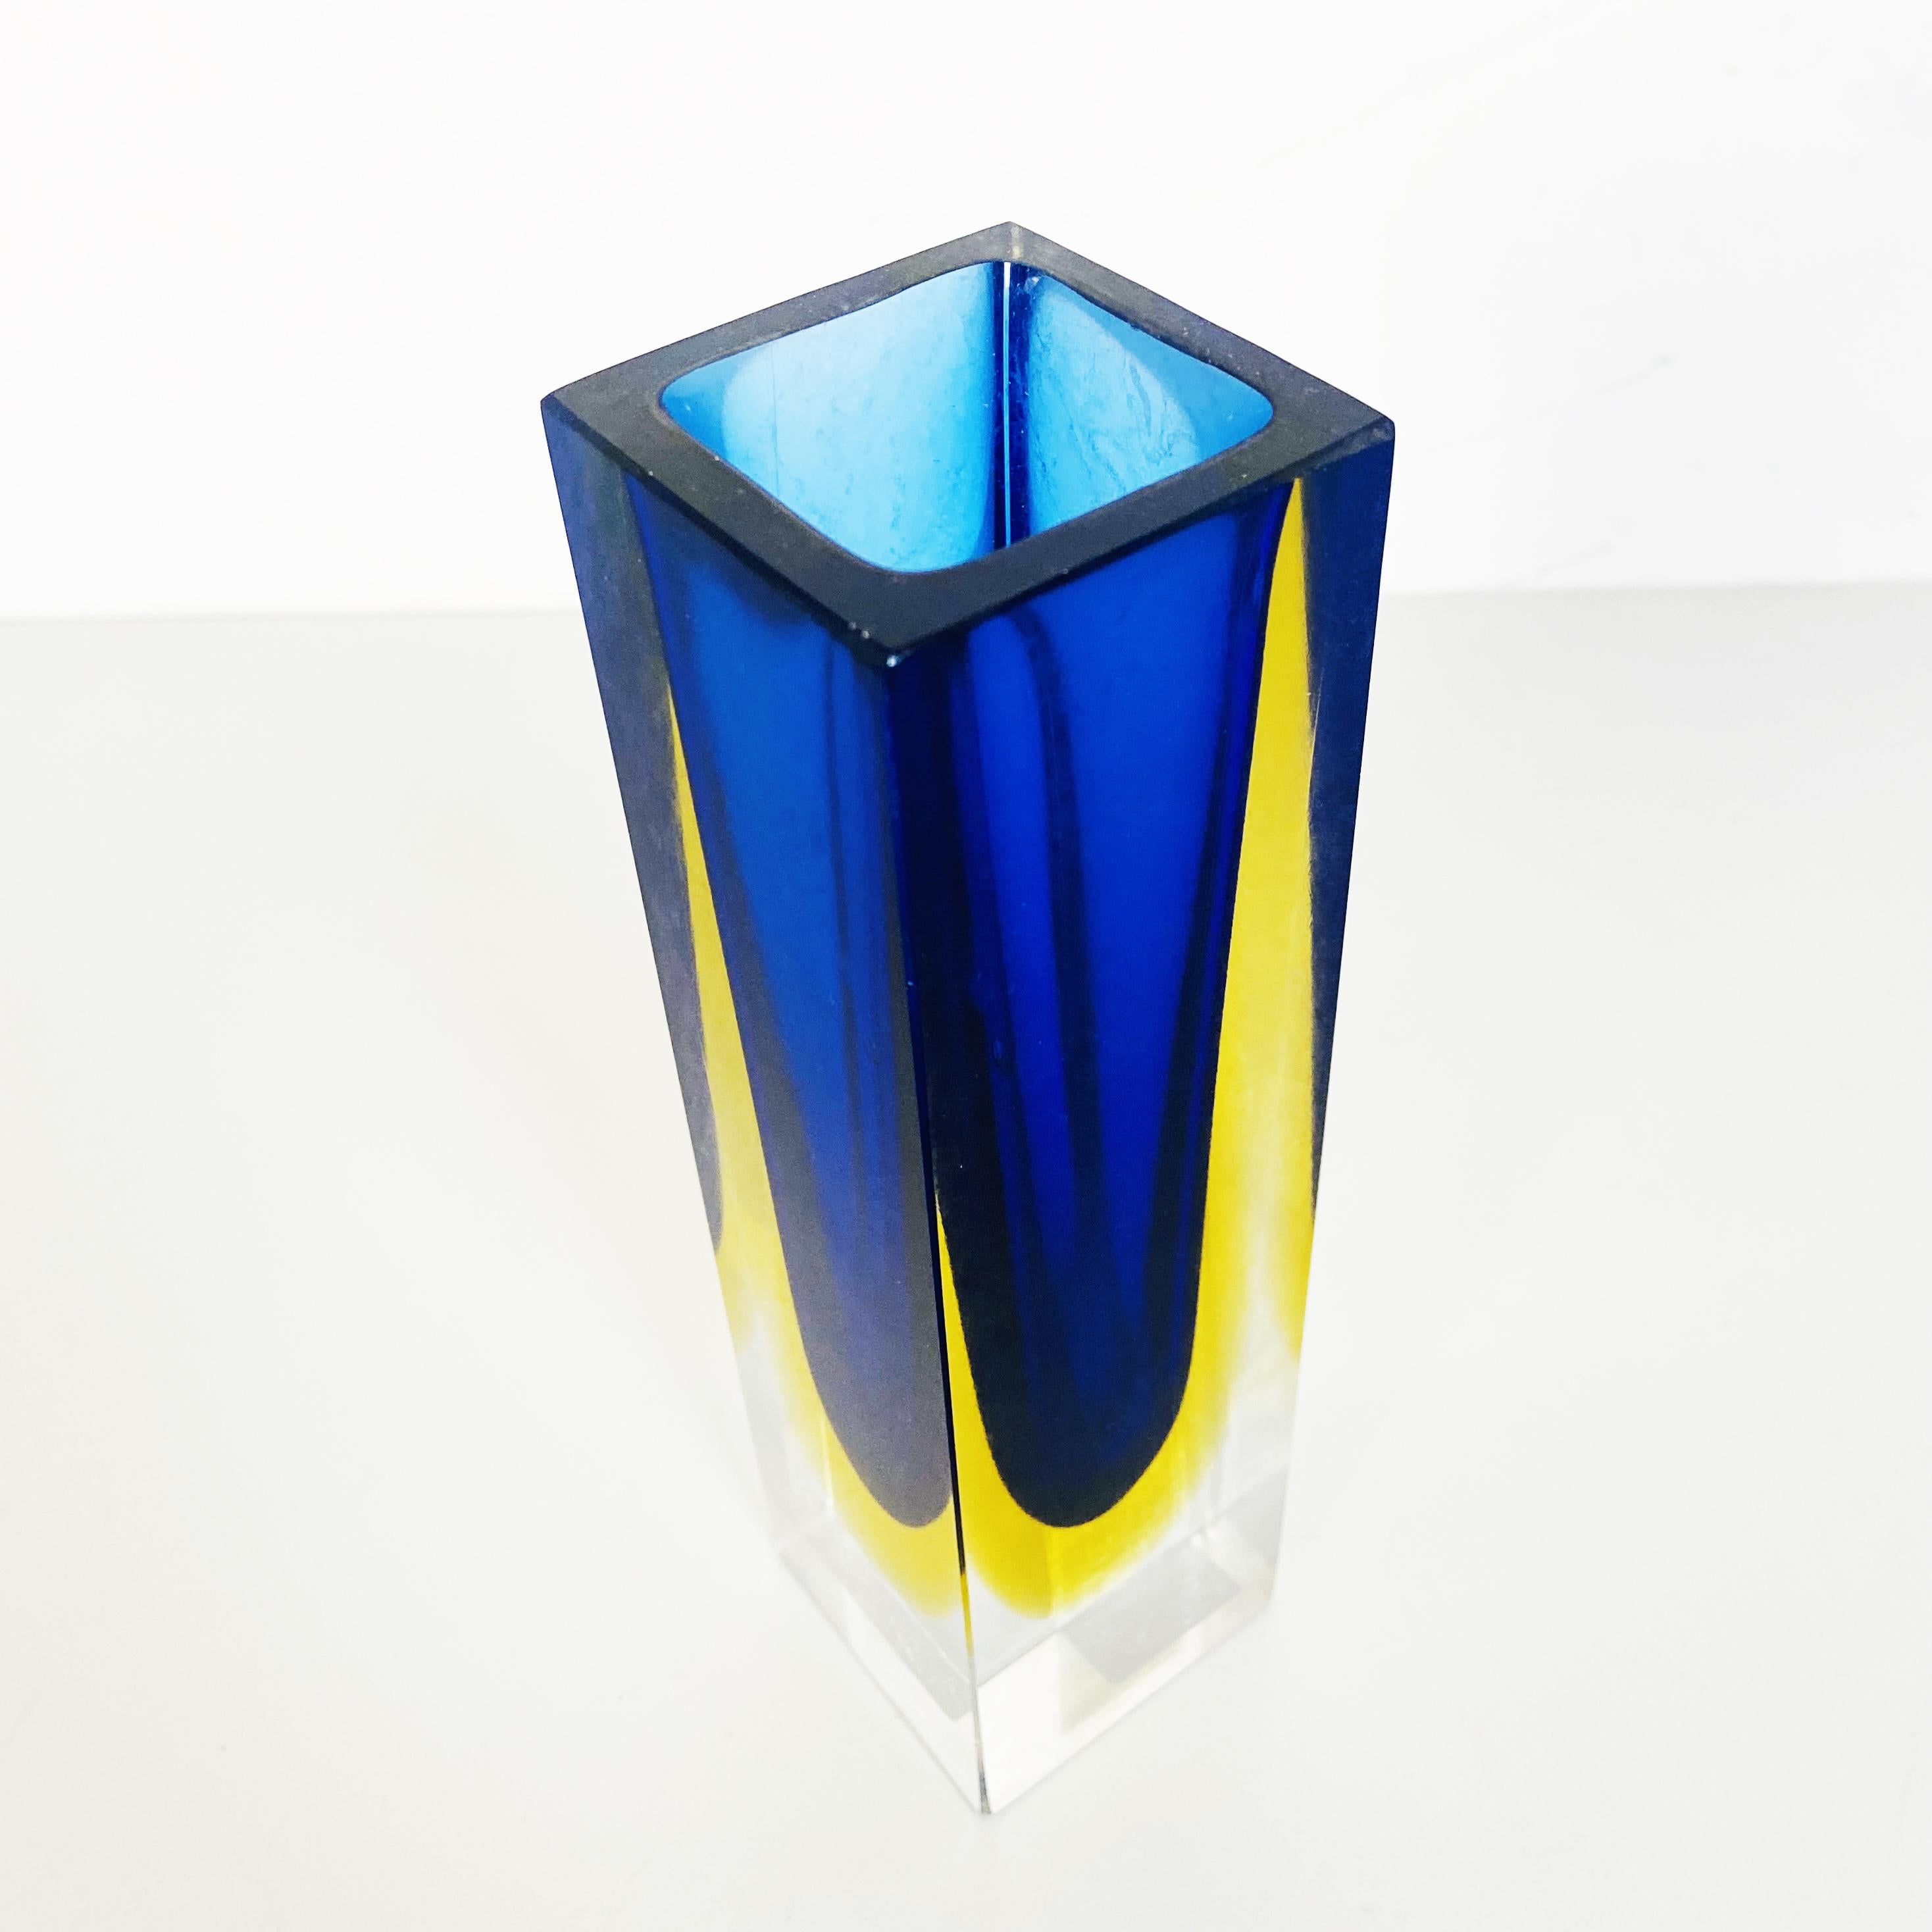 Late 20th Century Italian Mid-Century Blue Murano Glass Vase with Internal Yellow Shades, 1970s